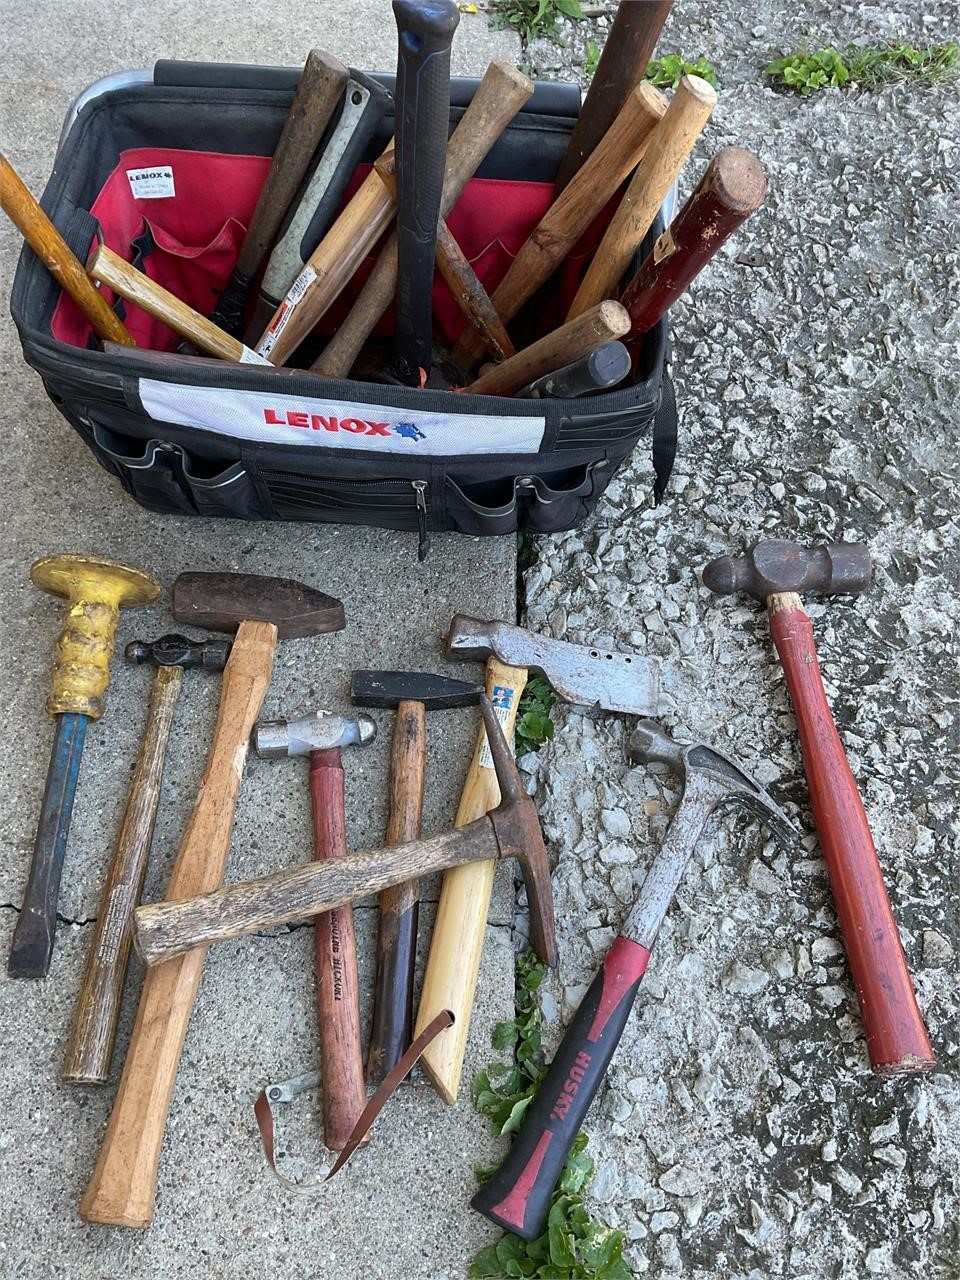 Assorted  hammers in Lenox bag